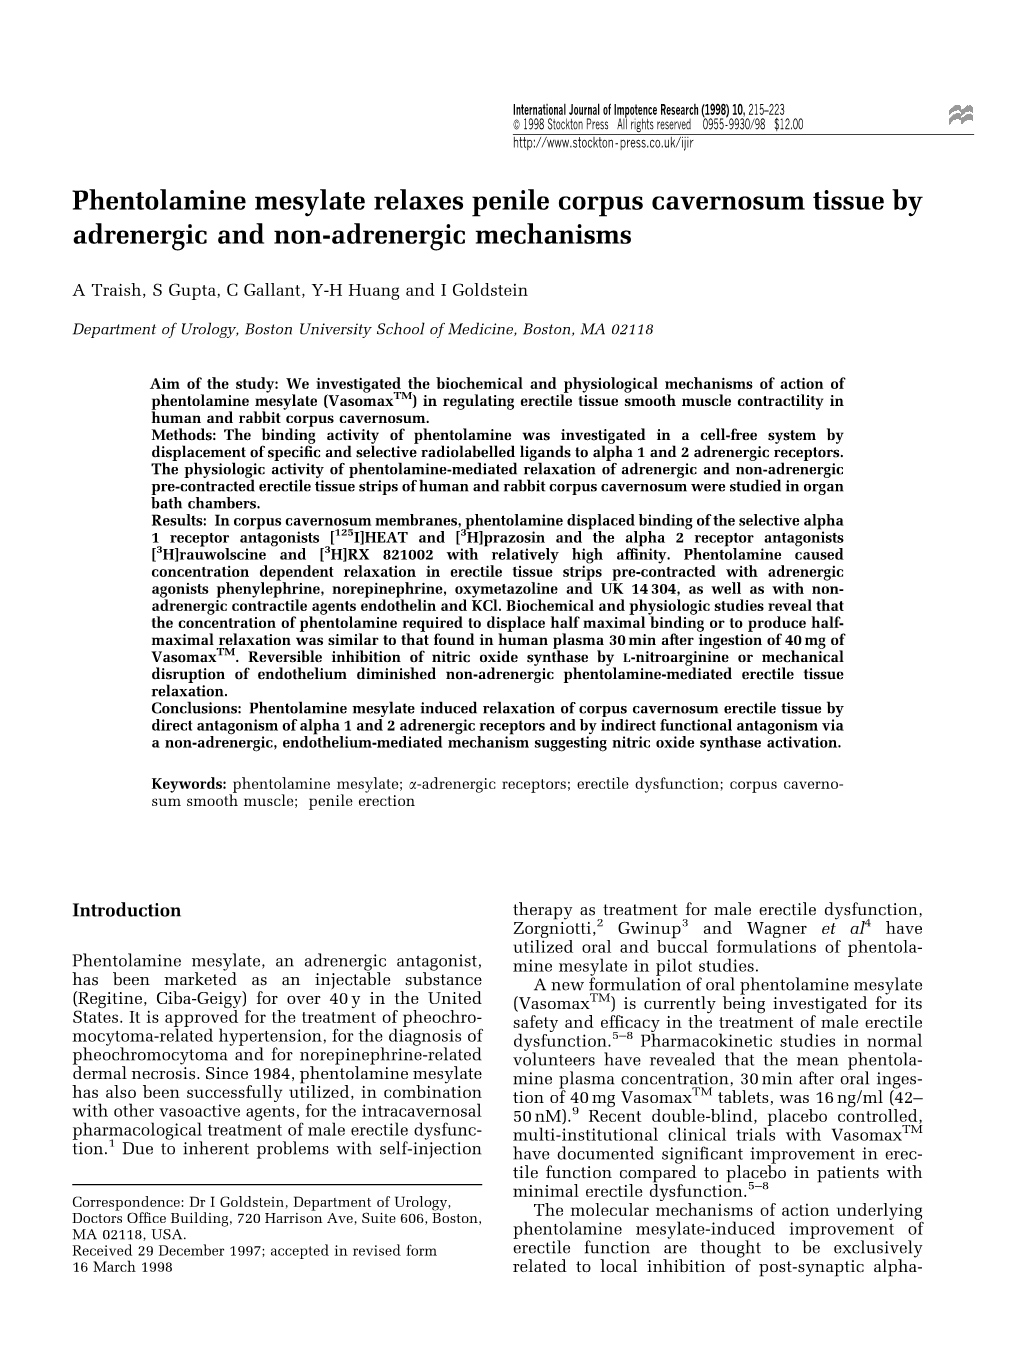 Phentolamine Mesylate Relaxes Penile Corpus Cavernosum Tissue by Adrenergic and Non-Adrenergic Mechanisms